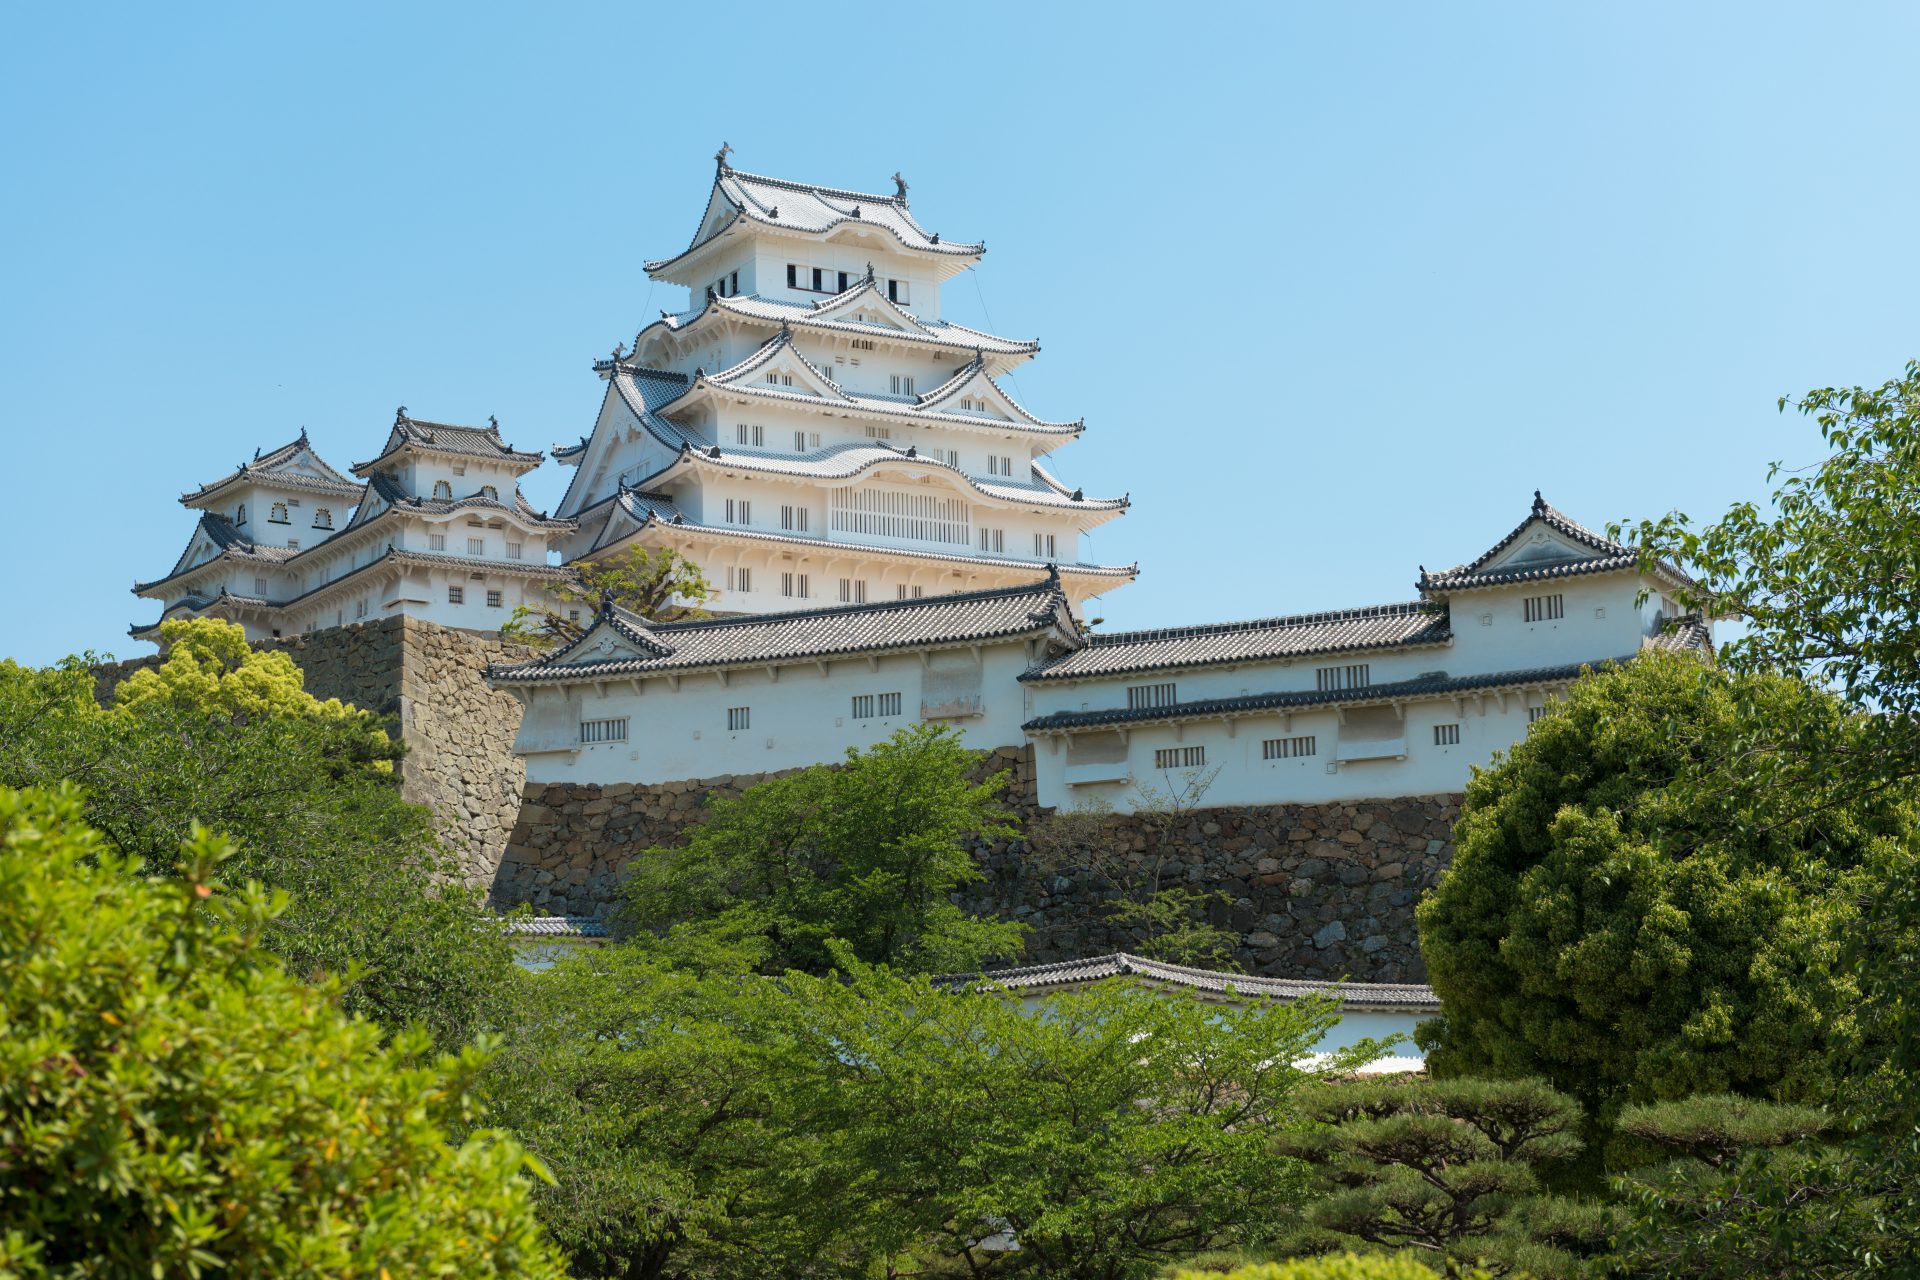 Himeji Castle - Japan 